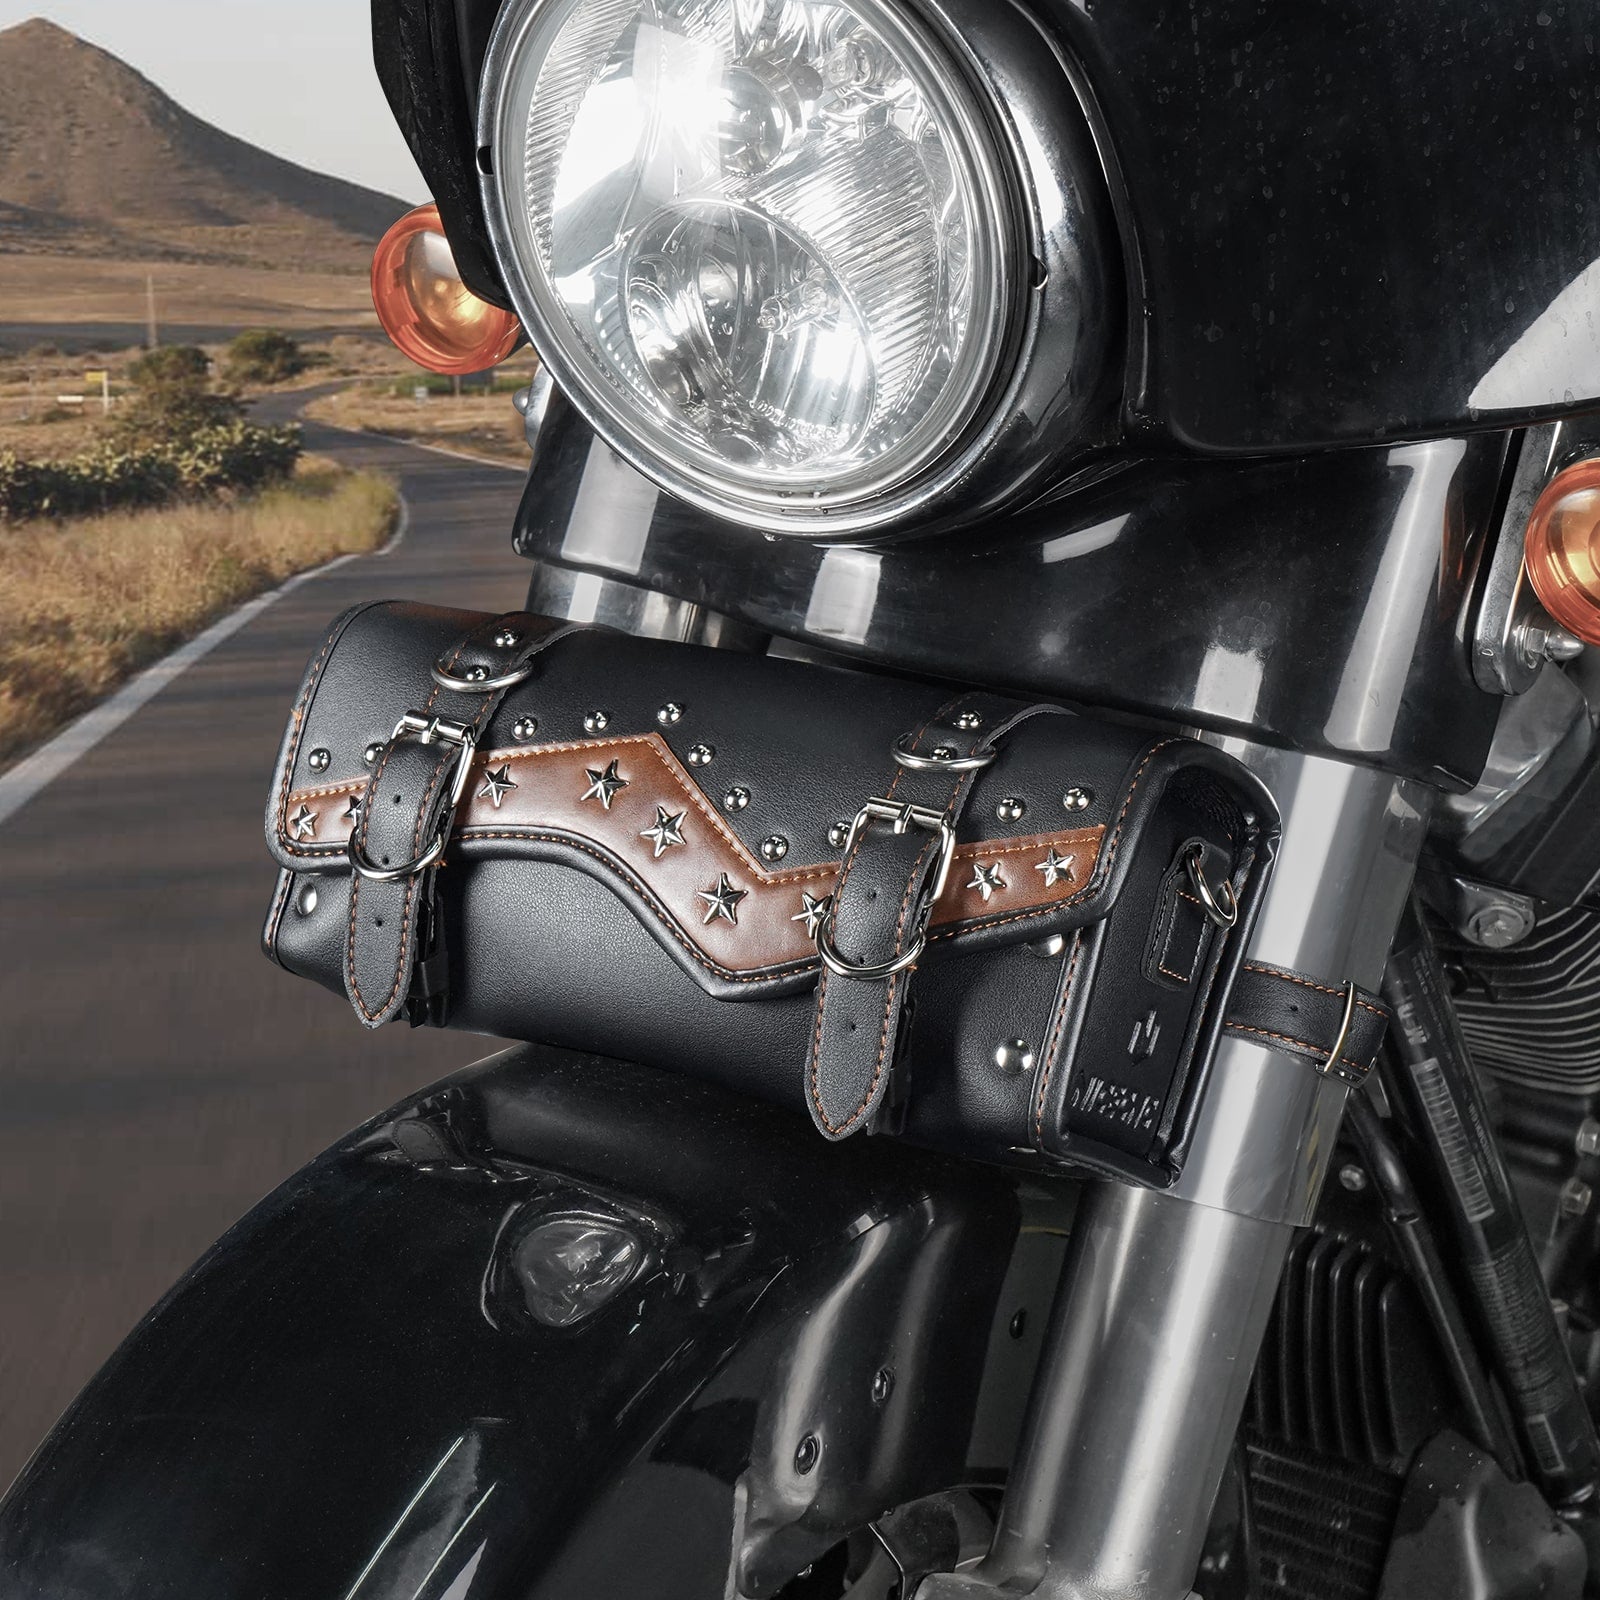 Motorcycle Handlebar Bag Star Rivet Cowhide Texture PU leather